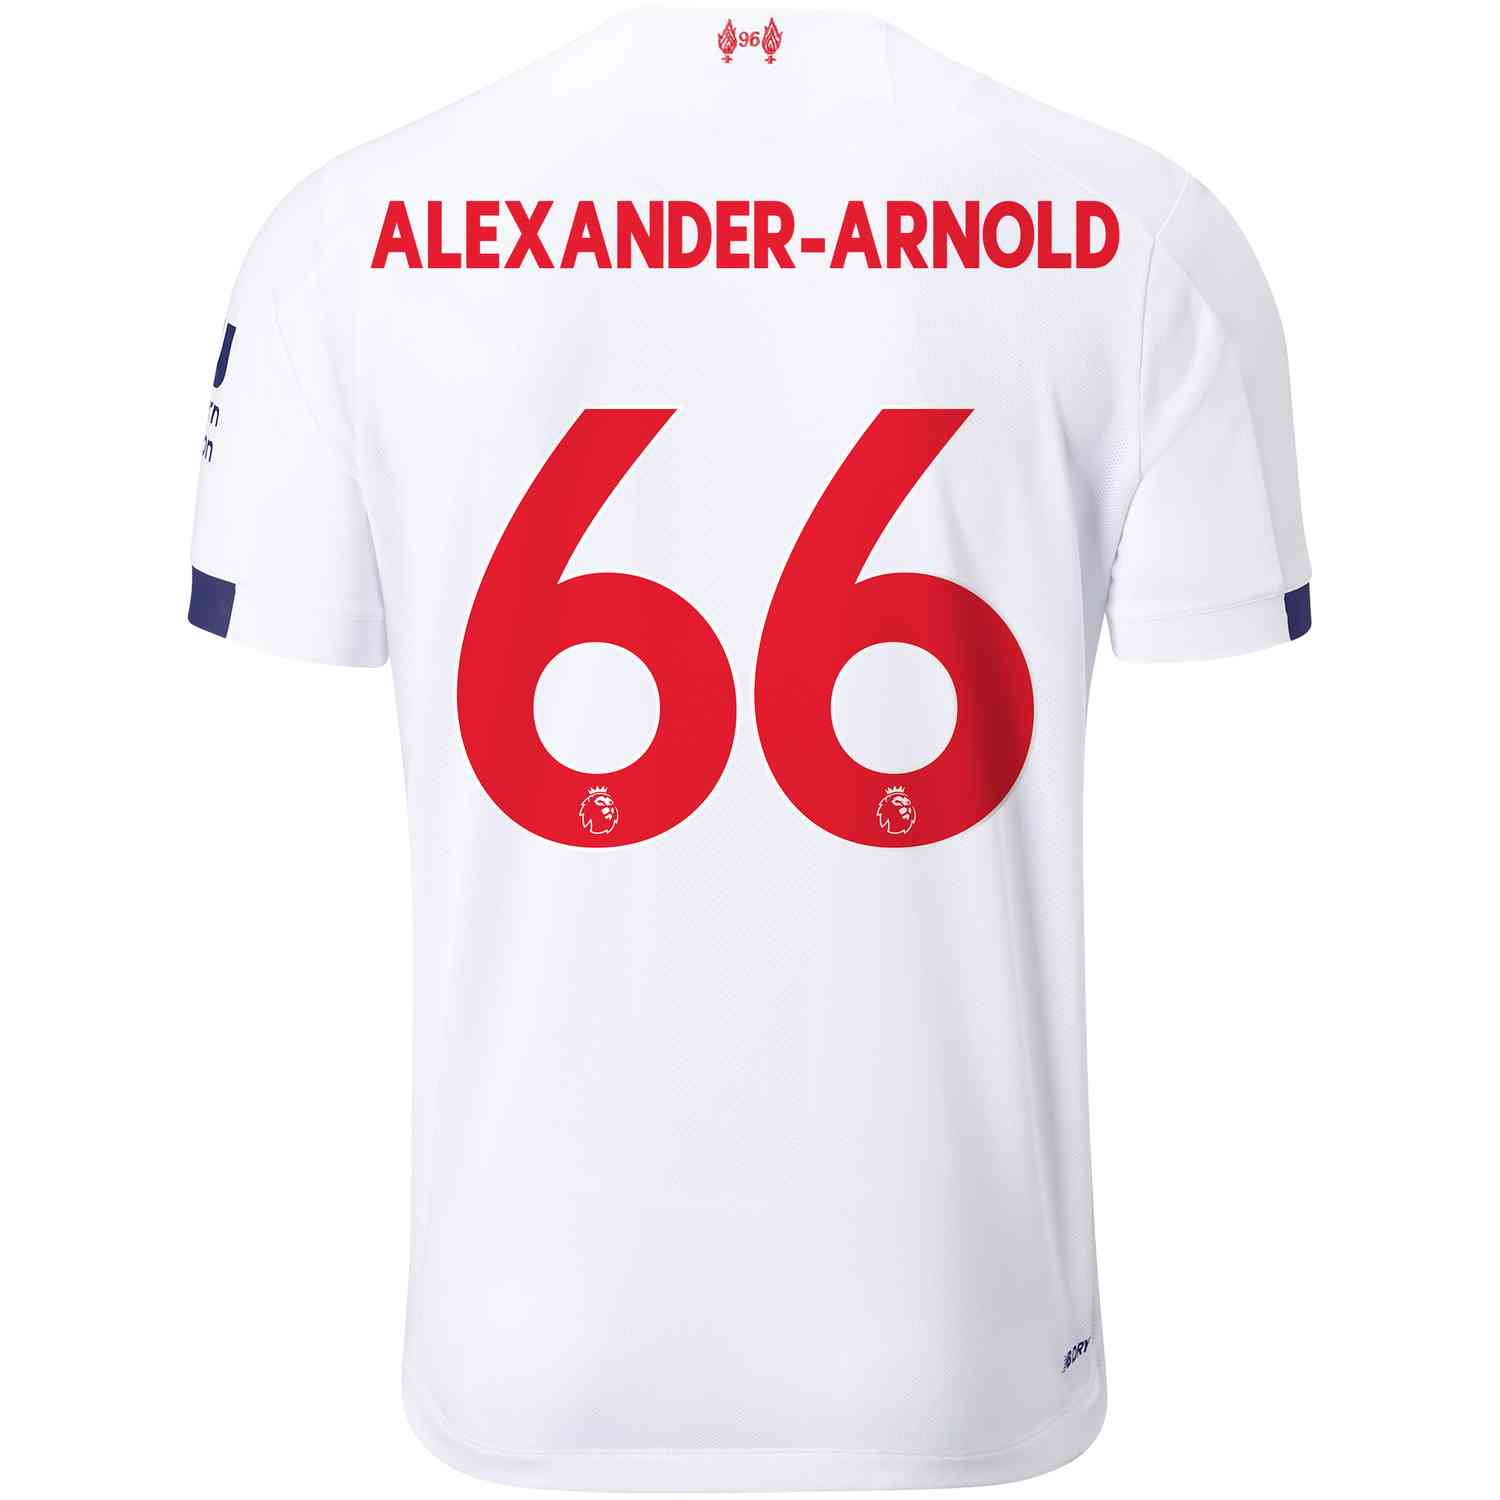 alexander arnold liverpool jersey